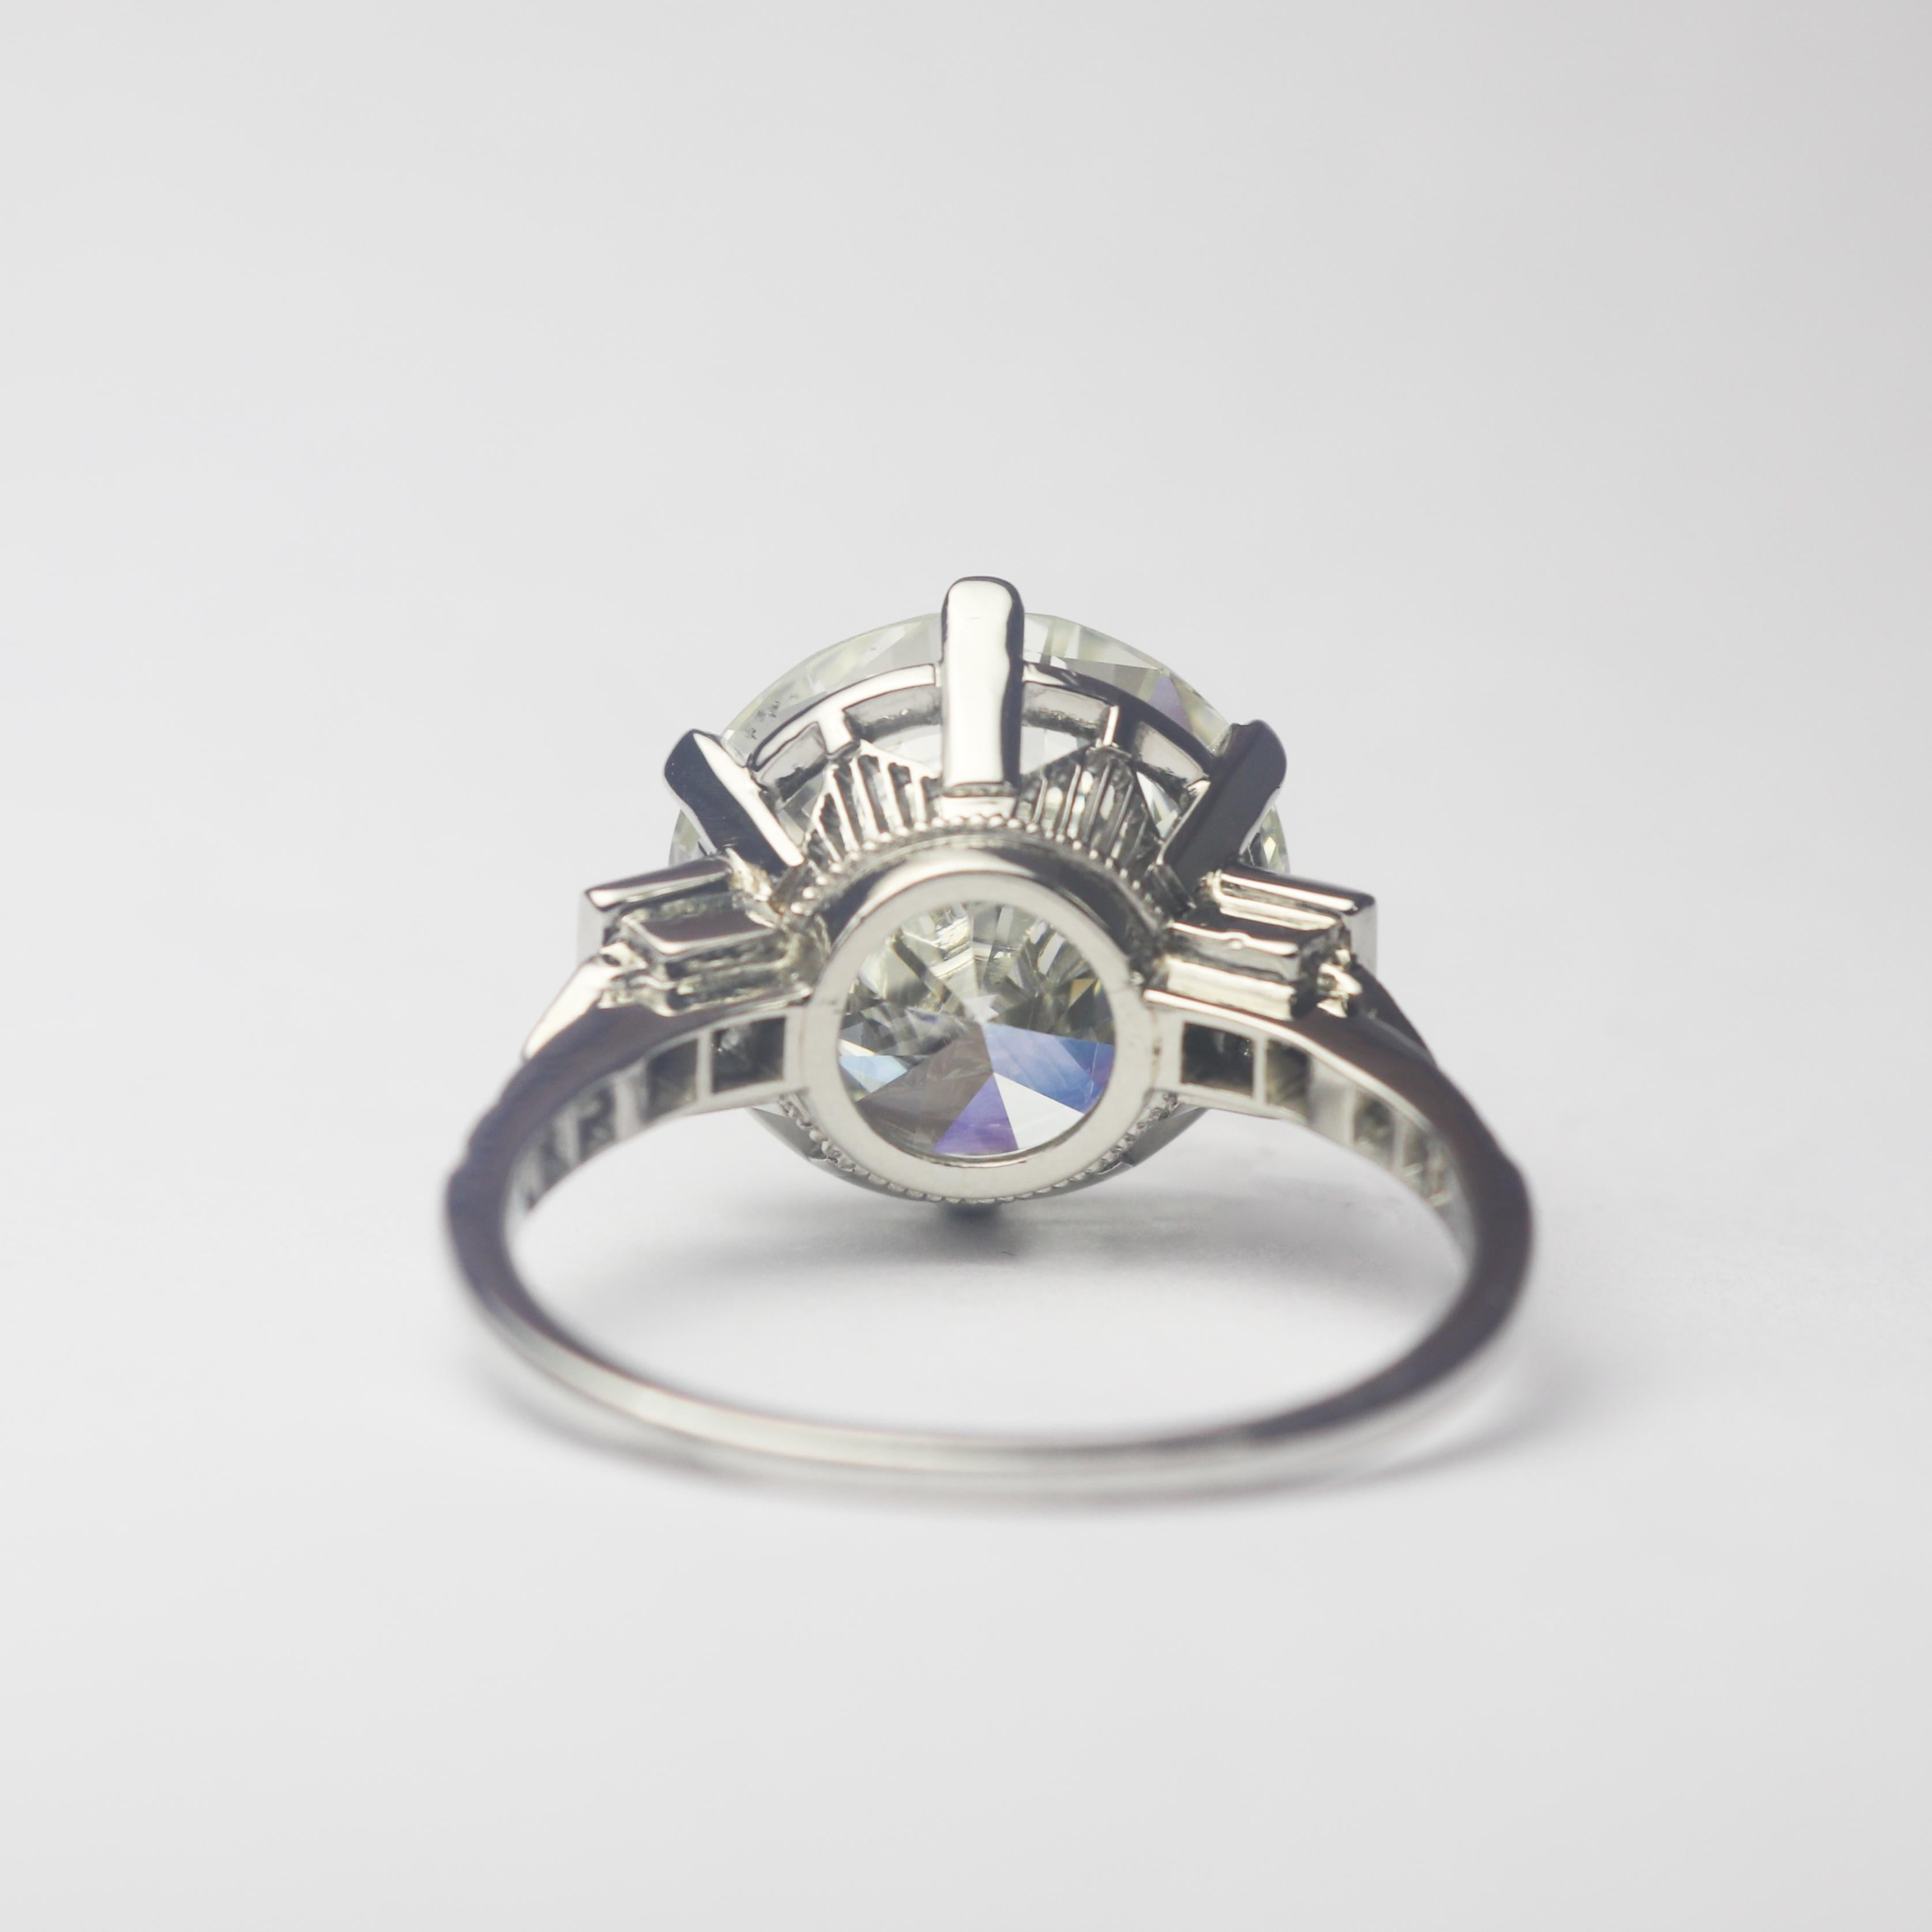 Round Cut GIA Certified 7.82 Carat Round Brilliant Cut Diamond Art Deco Style Ring